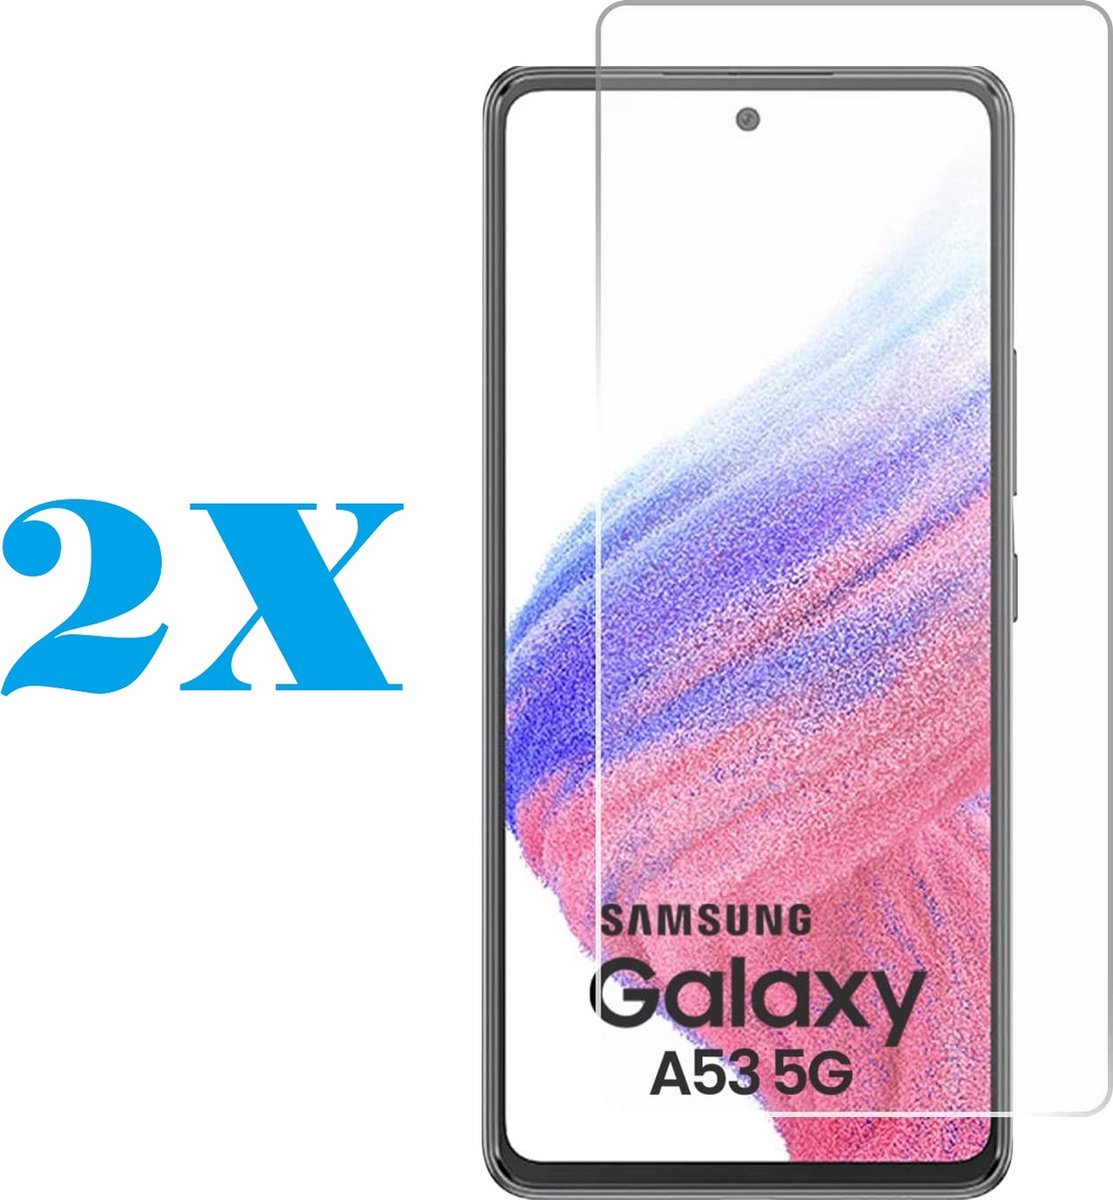 2X Screenprotector Samsung Galaxy A53 5G | Glasplaat | Tempered Glass | Bescherming Voor Samsung Galaxy A53 5G - 2 Stuks PROLEDPARTNERS ®